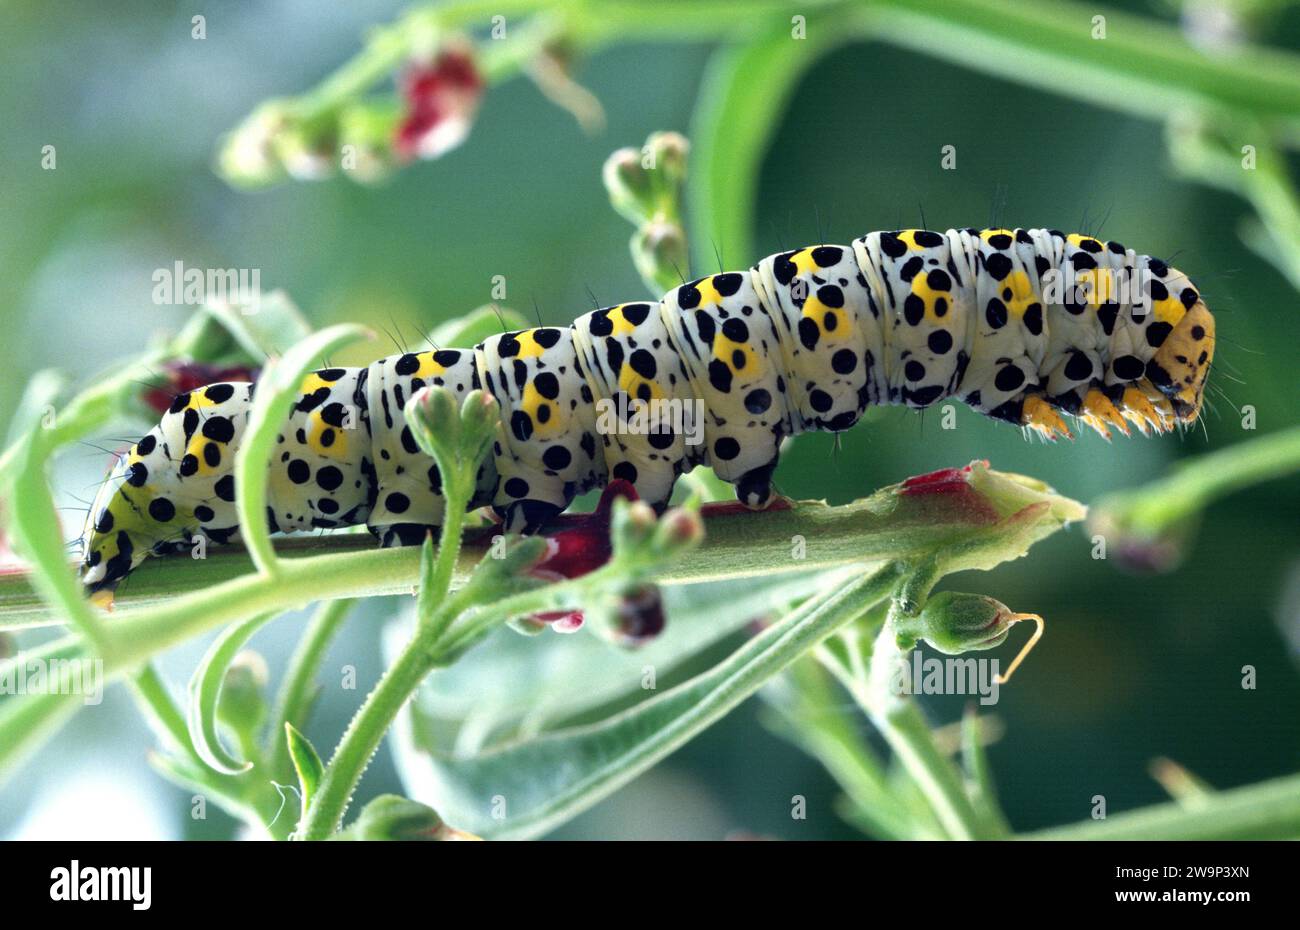 Water betony (Cucullia scrophulariae or Shargacucullia scrophulariae) is a moth native to Europe. Caterpillar on a feeding plant. Stock Photo